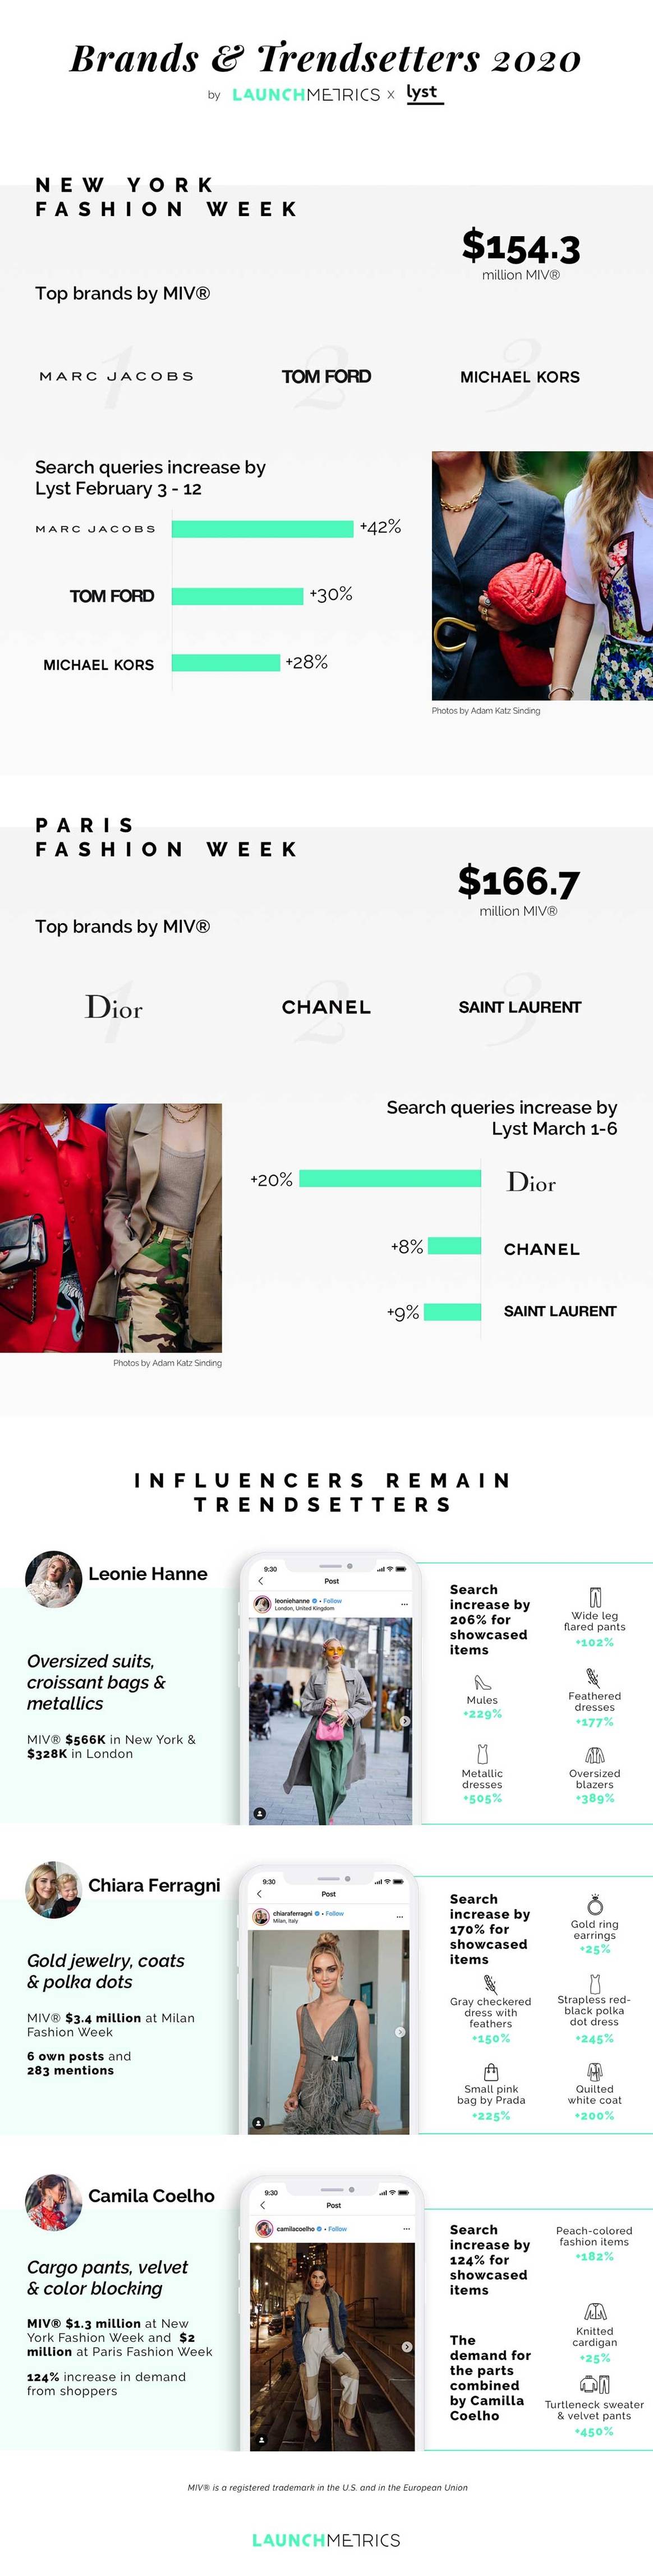 Lyst x Launchmetrics: media's impact on fashion weeks in figures